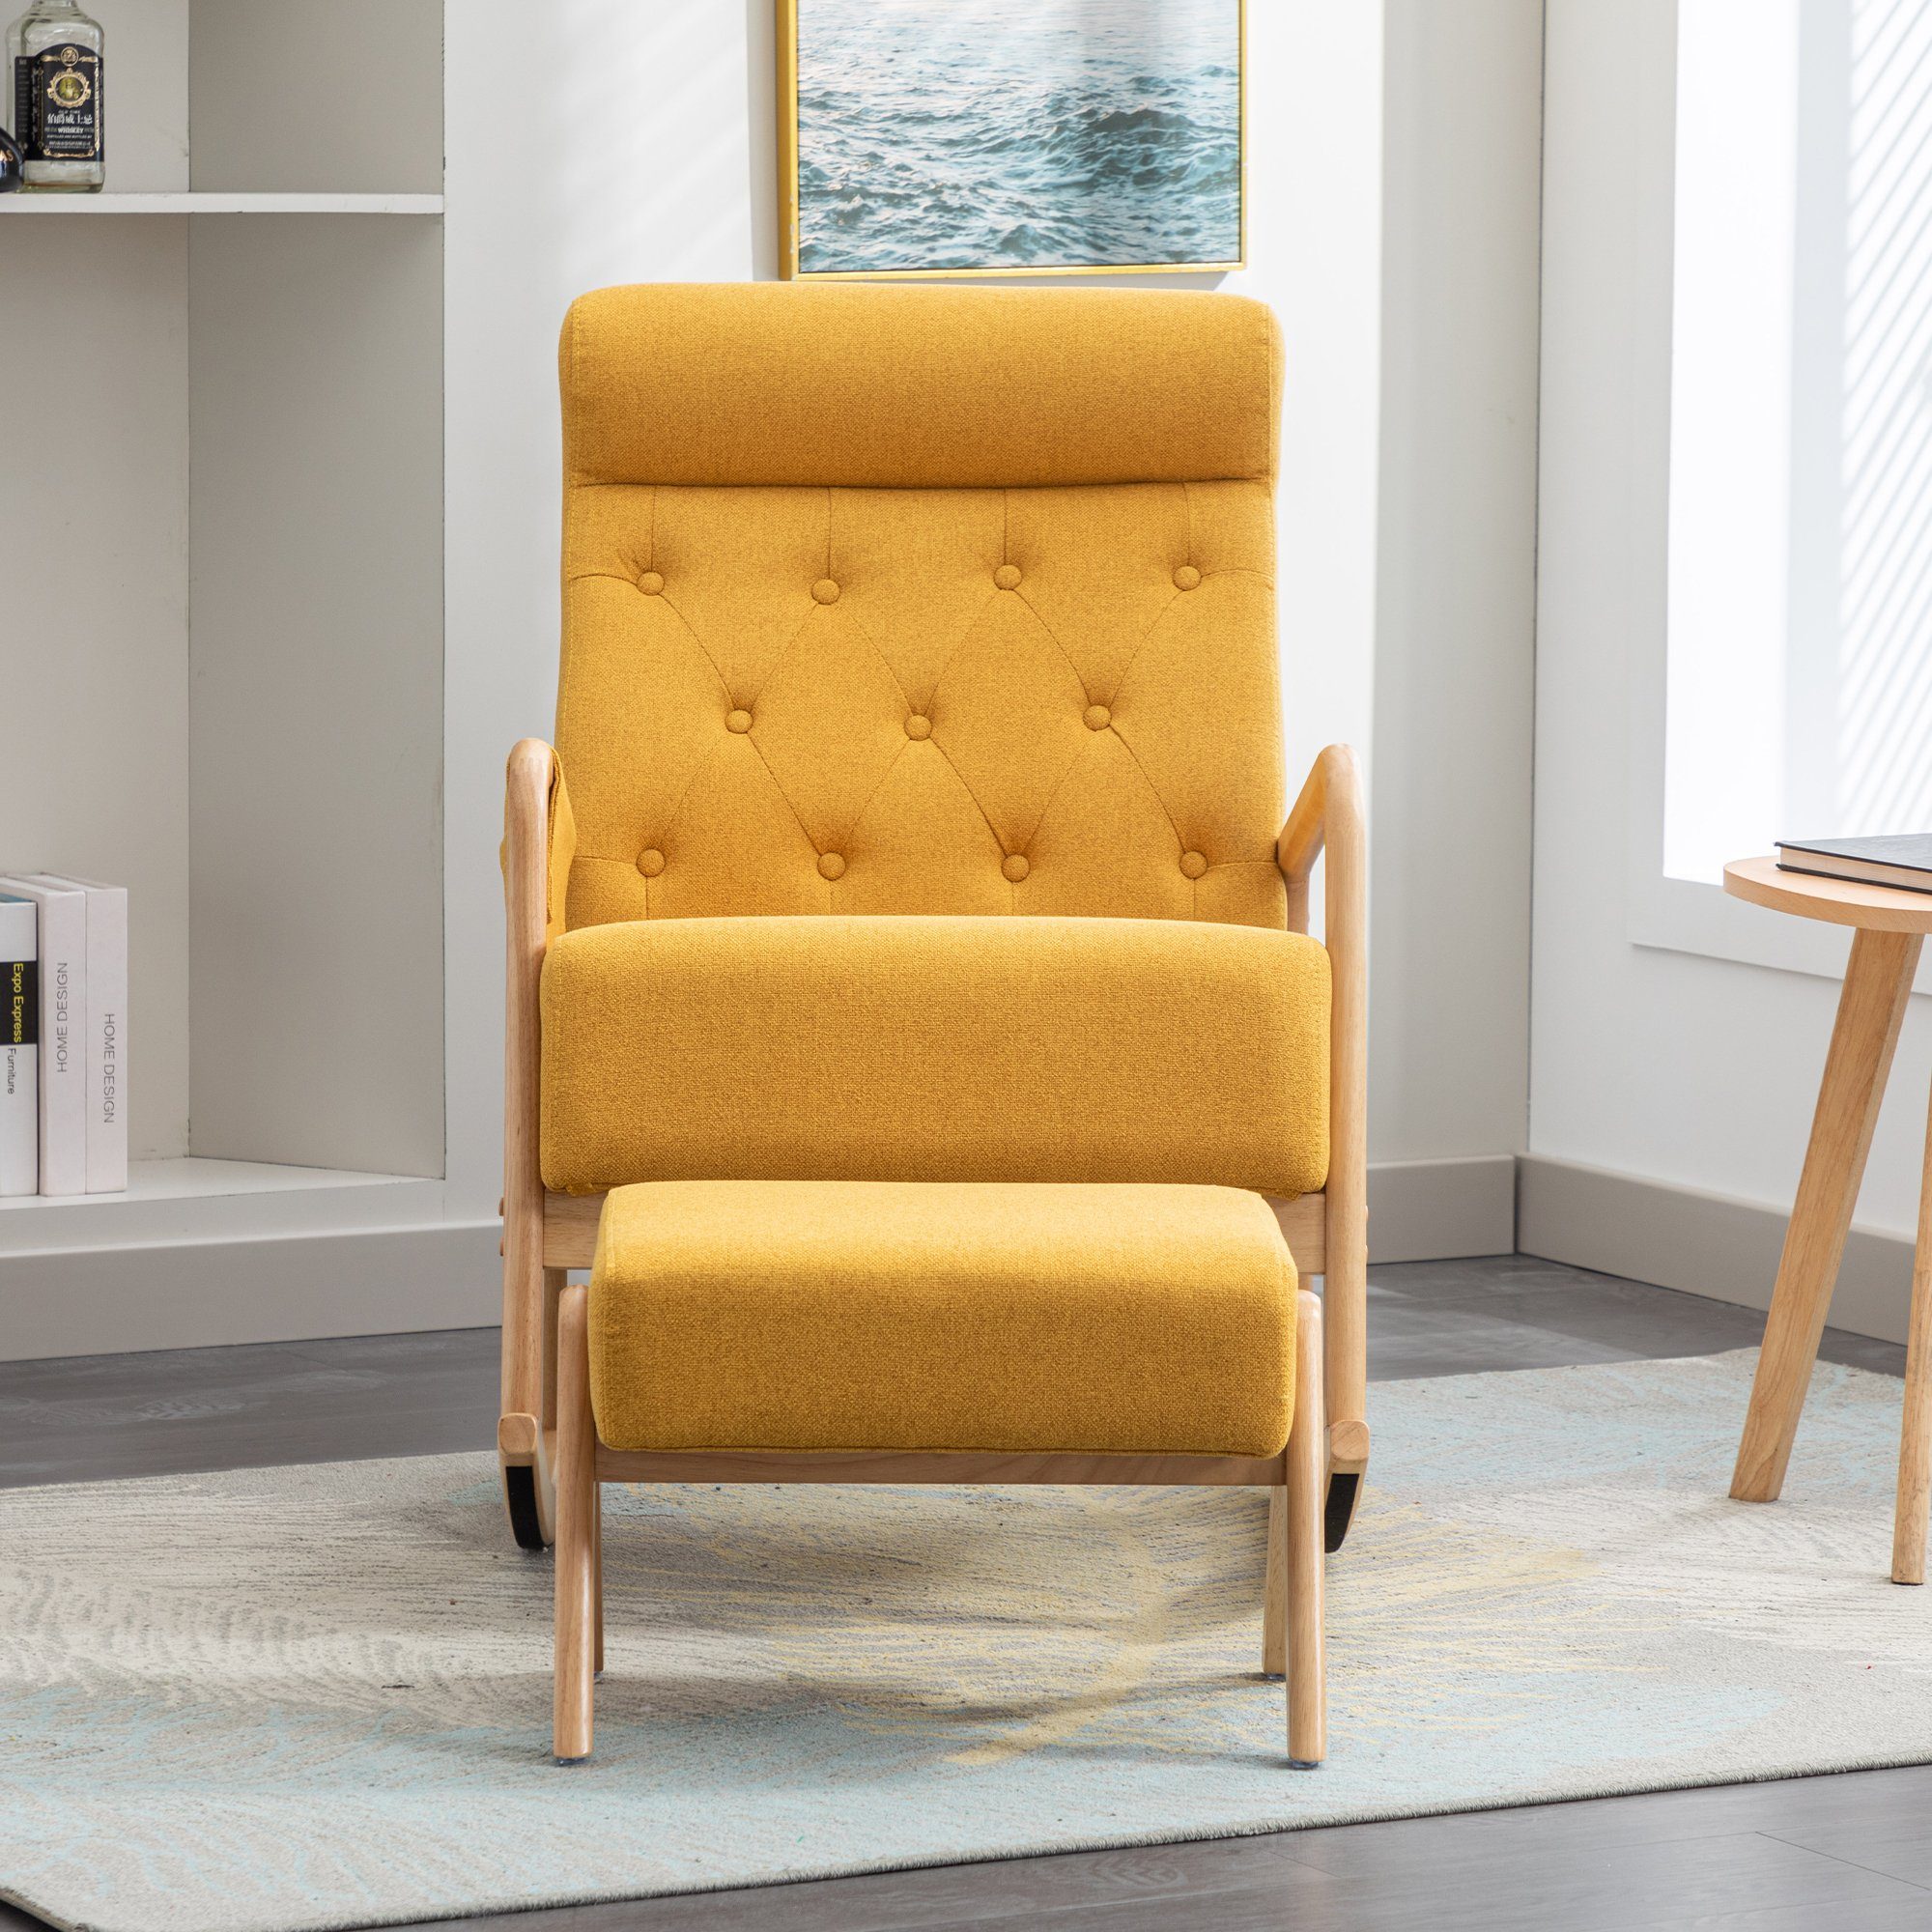 Odikalo Schaukelstuhl Lounge-Sessel Gelb Einzelstuhl mane Rückenlehne mehrfarbig gepolstert